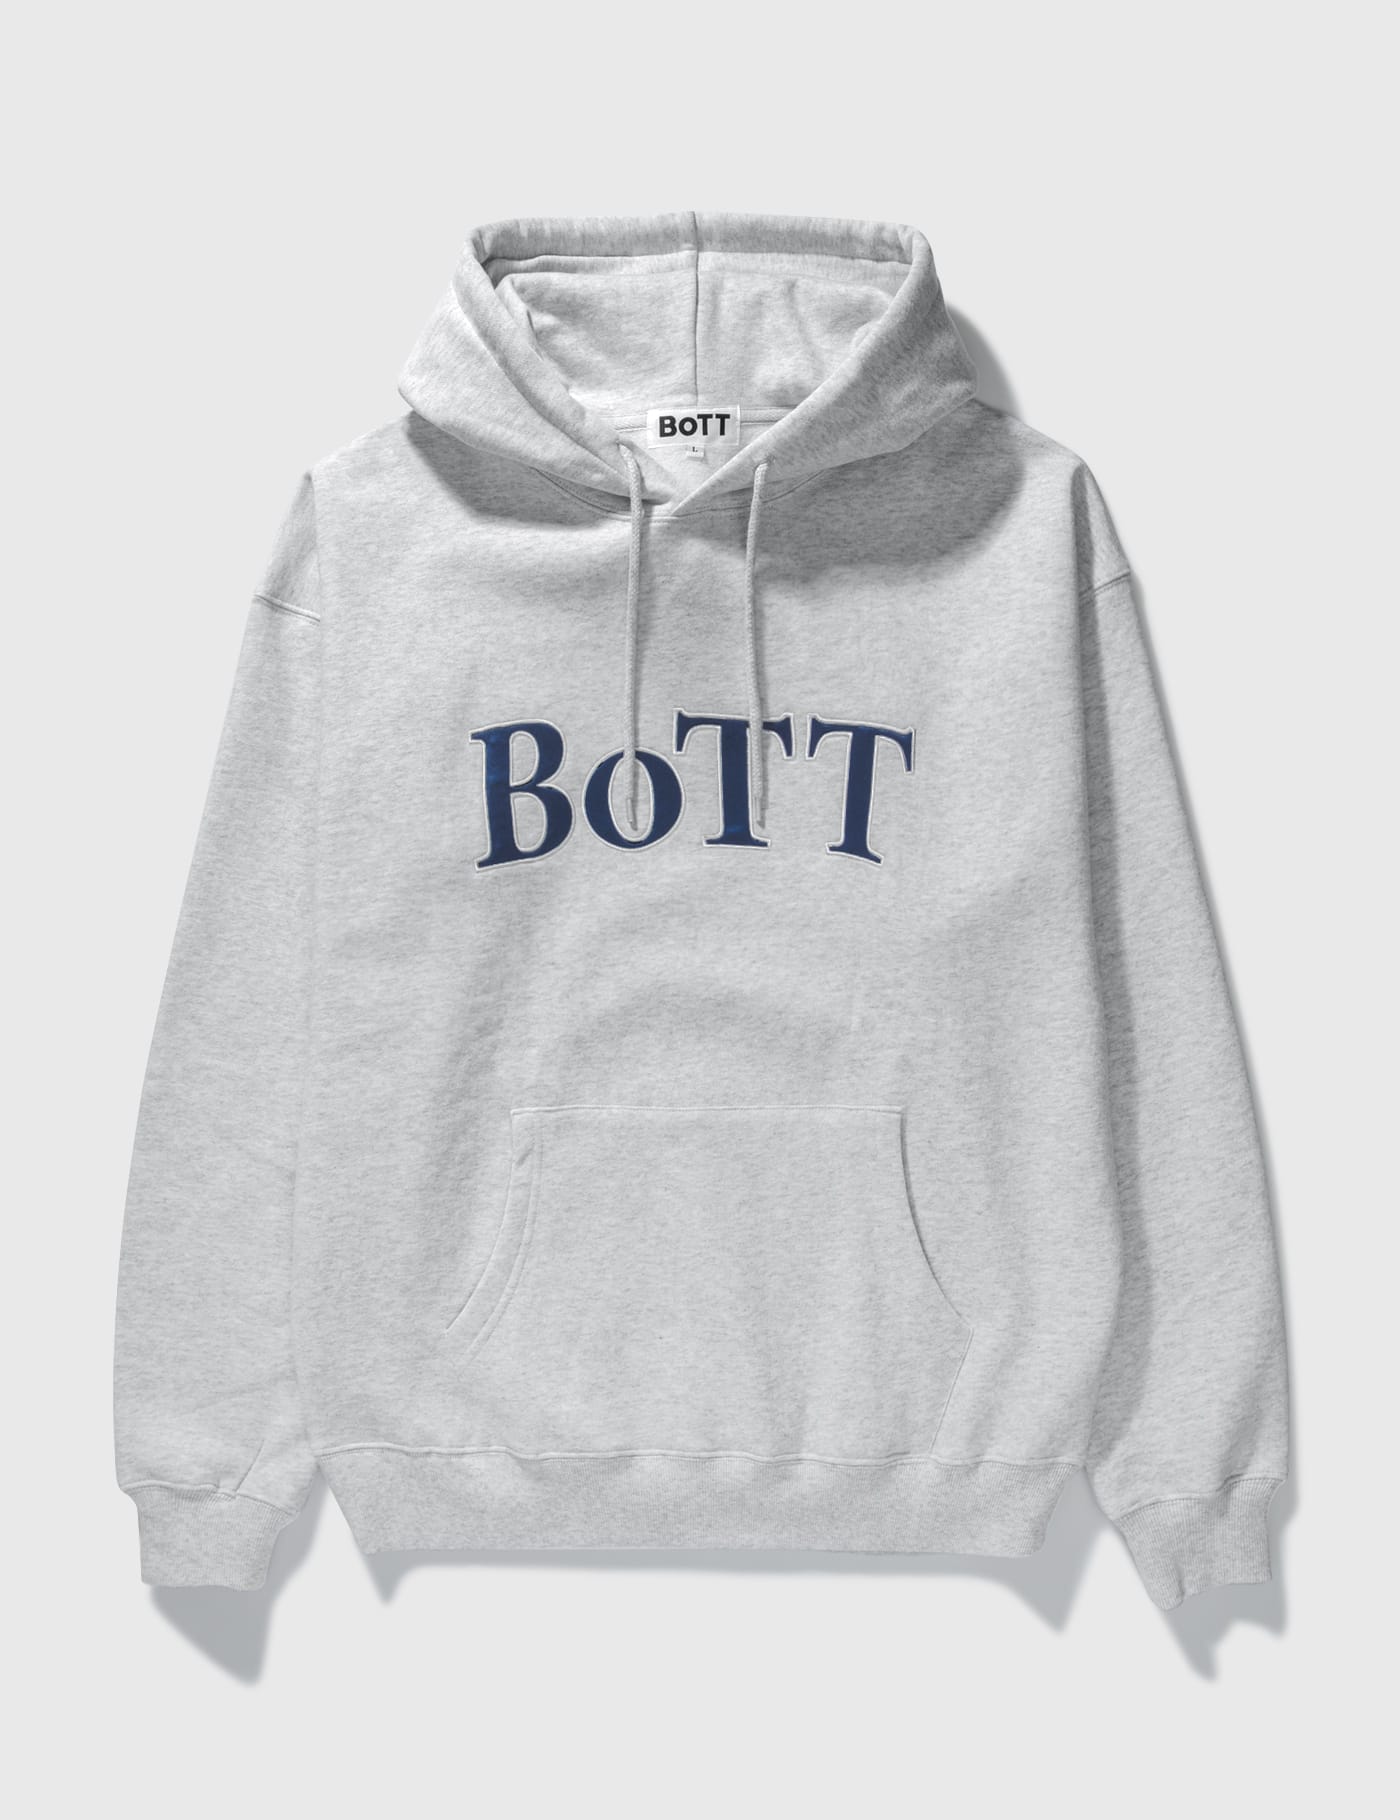 BoTT - BoTT OG Logo Hoodie | HBX - Globally Curated Fashion and 